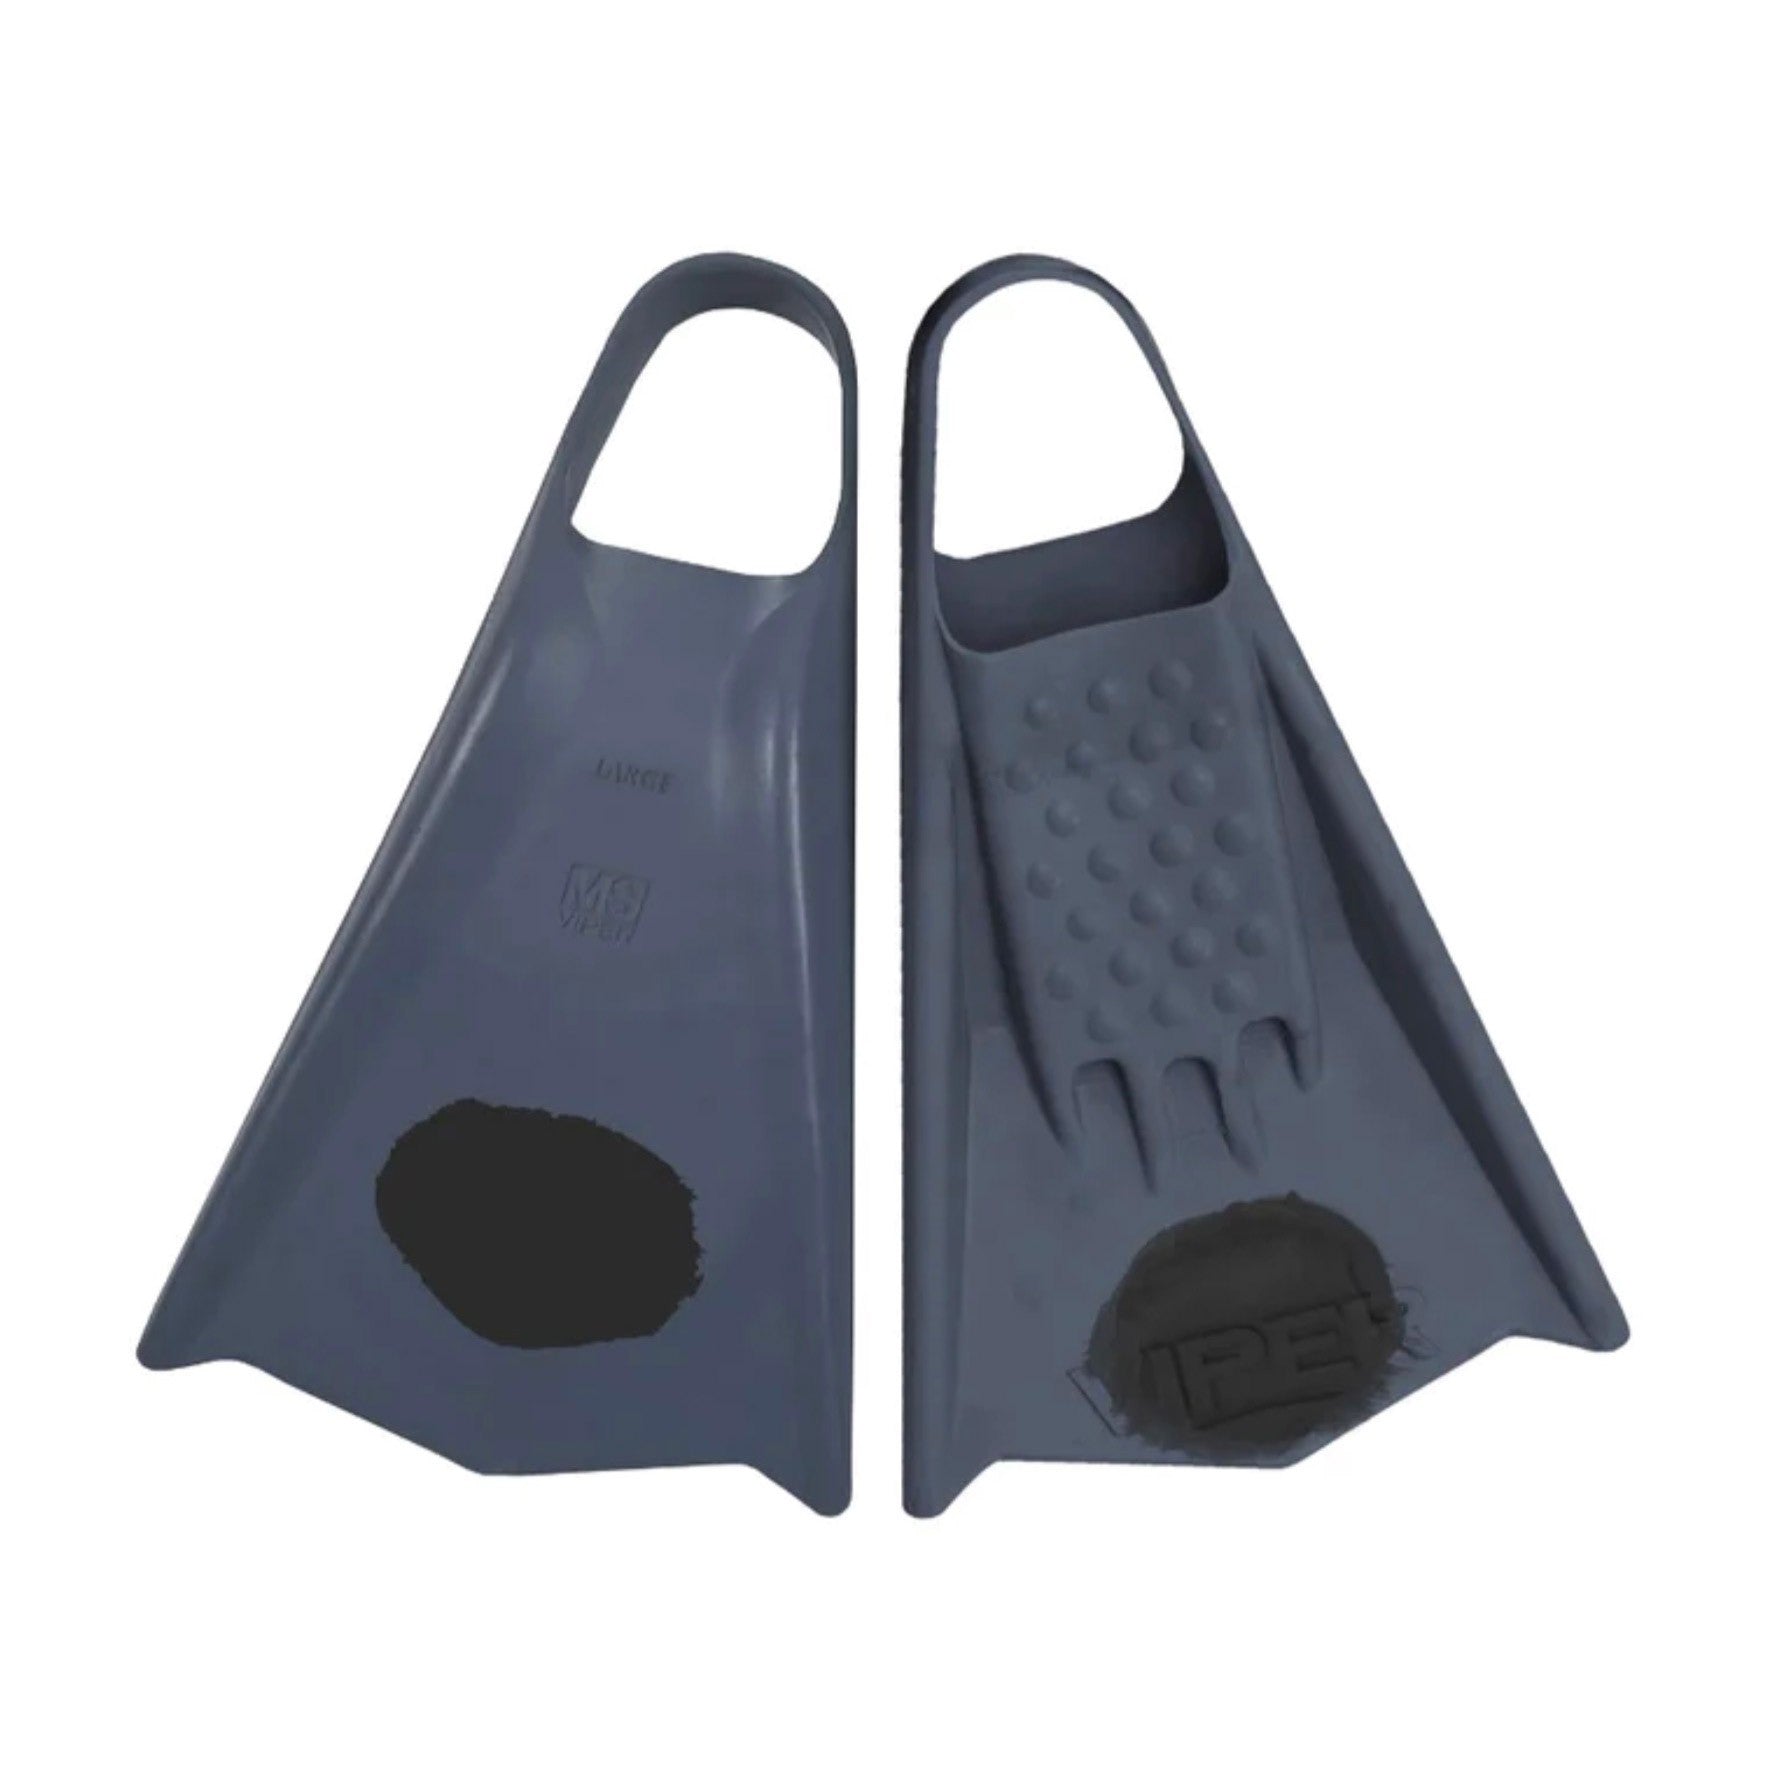 MS VIPER - Bodyboard Fins - Charcoal / Black